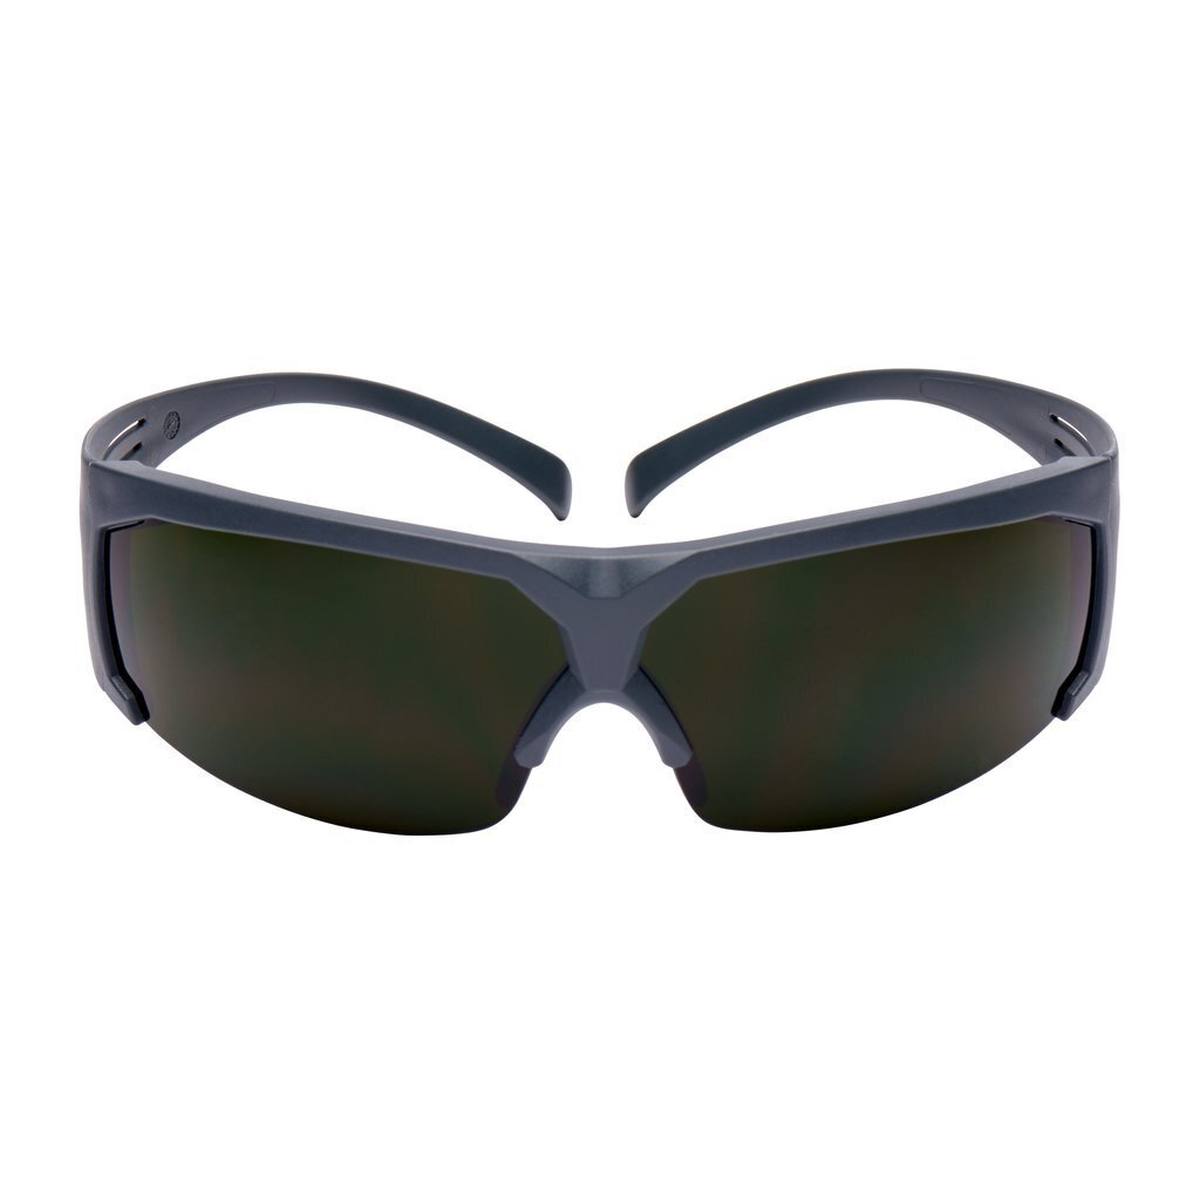 3M SecureFit 600 veiligheidsbril, grijze veren, antikrascoating, lasglas beschermingsniveau 5.0, SF650AS-E